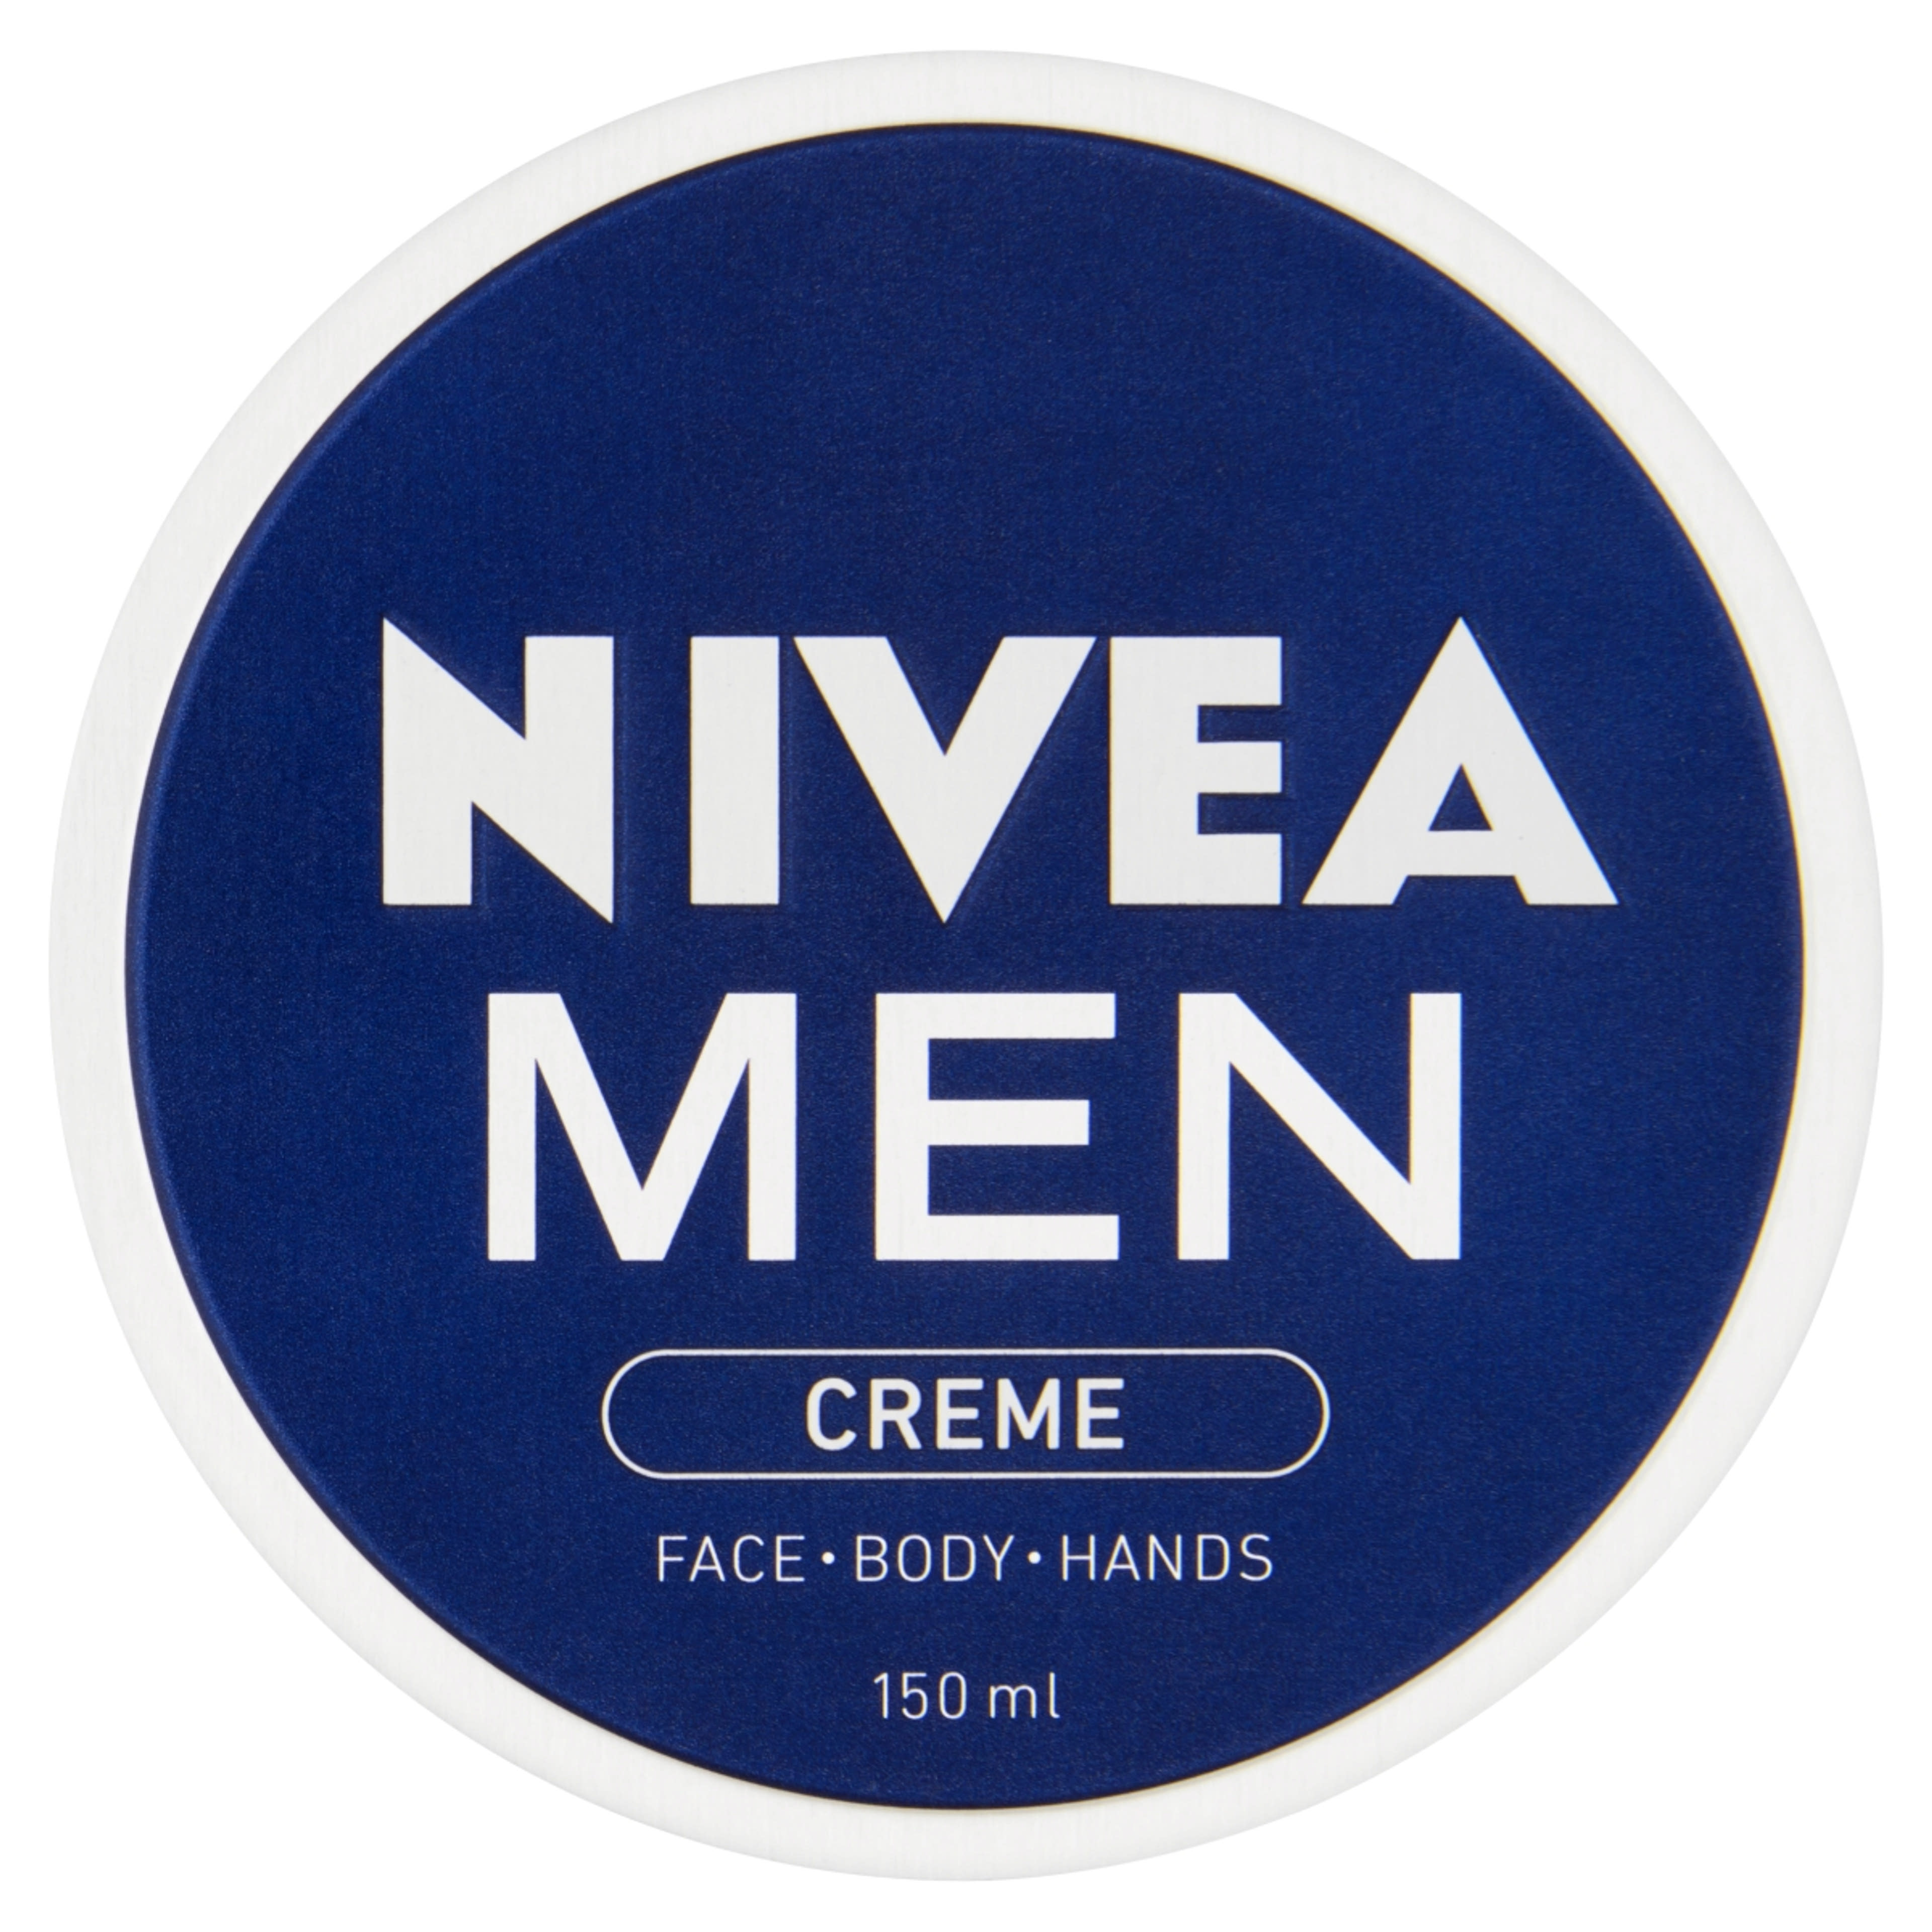 NIVEA MEN Creme - 150 ml-1